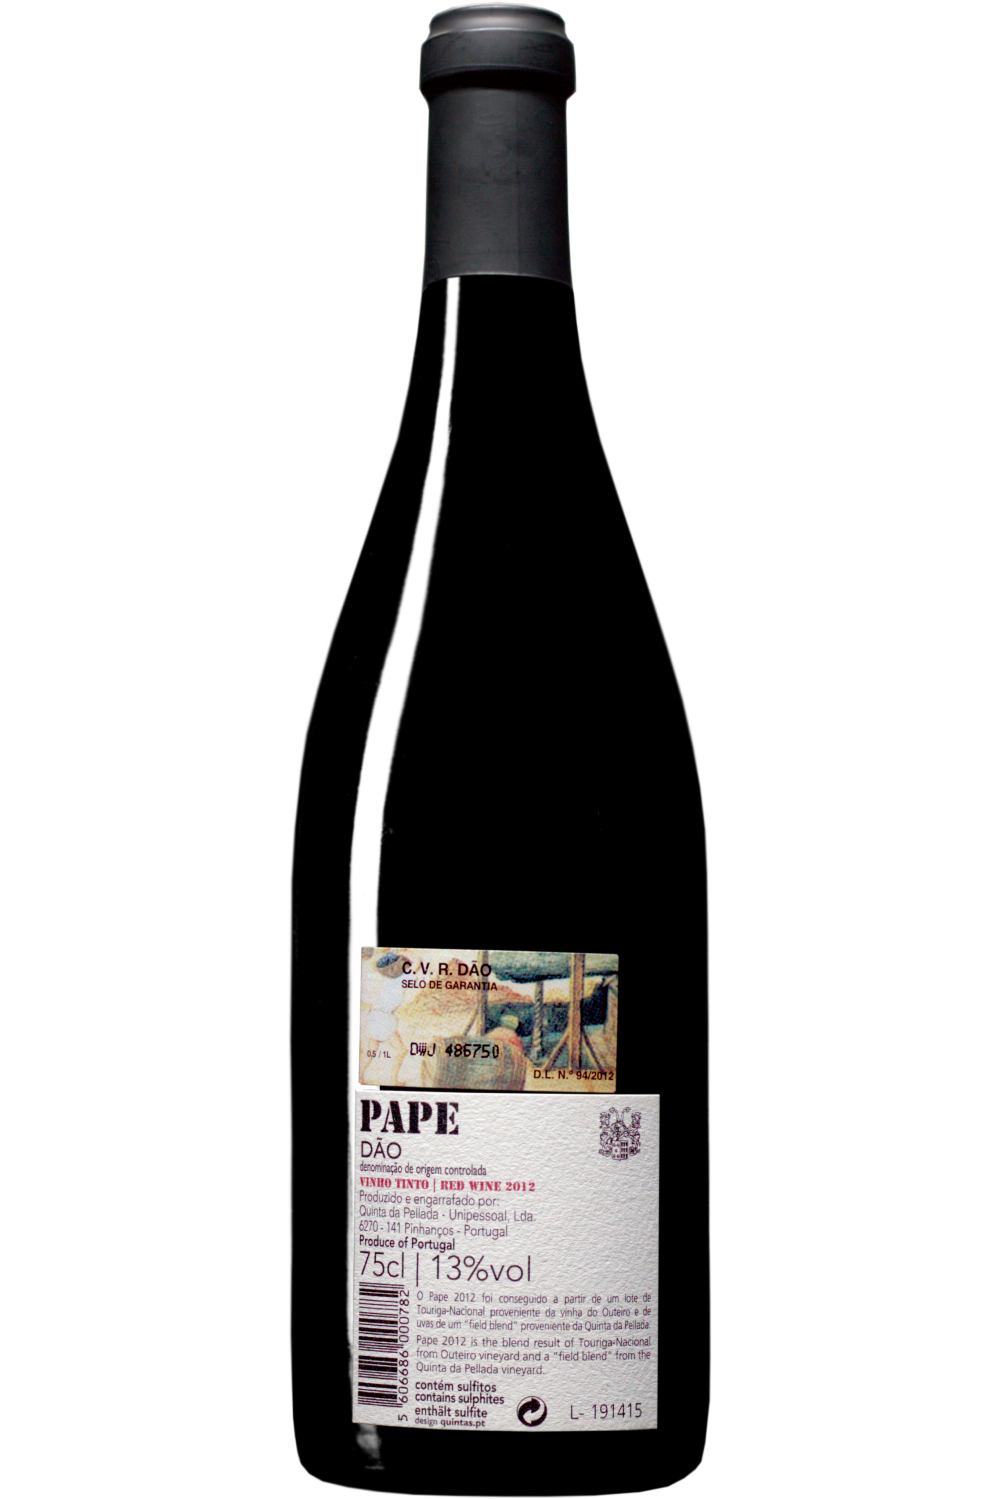 WineVins Pape Tinto 2012